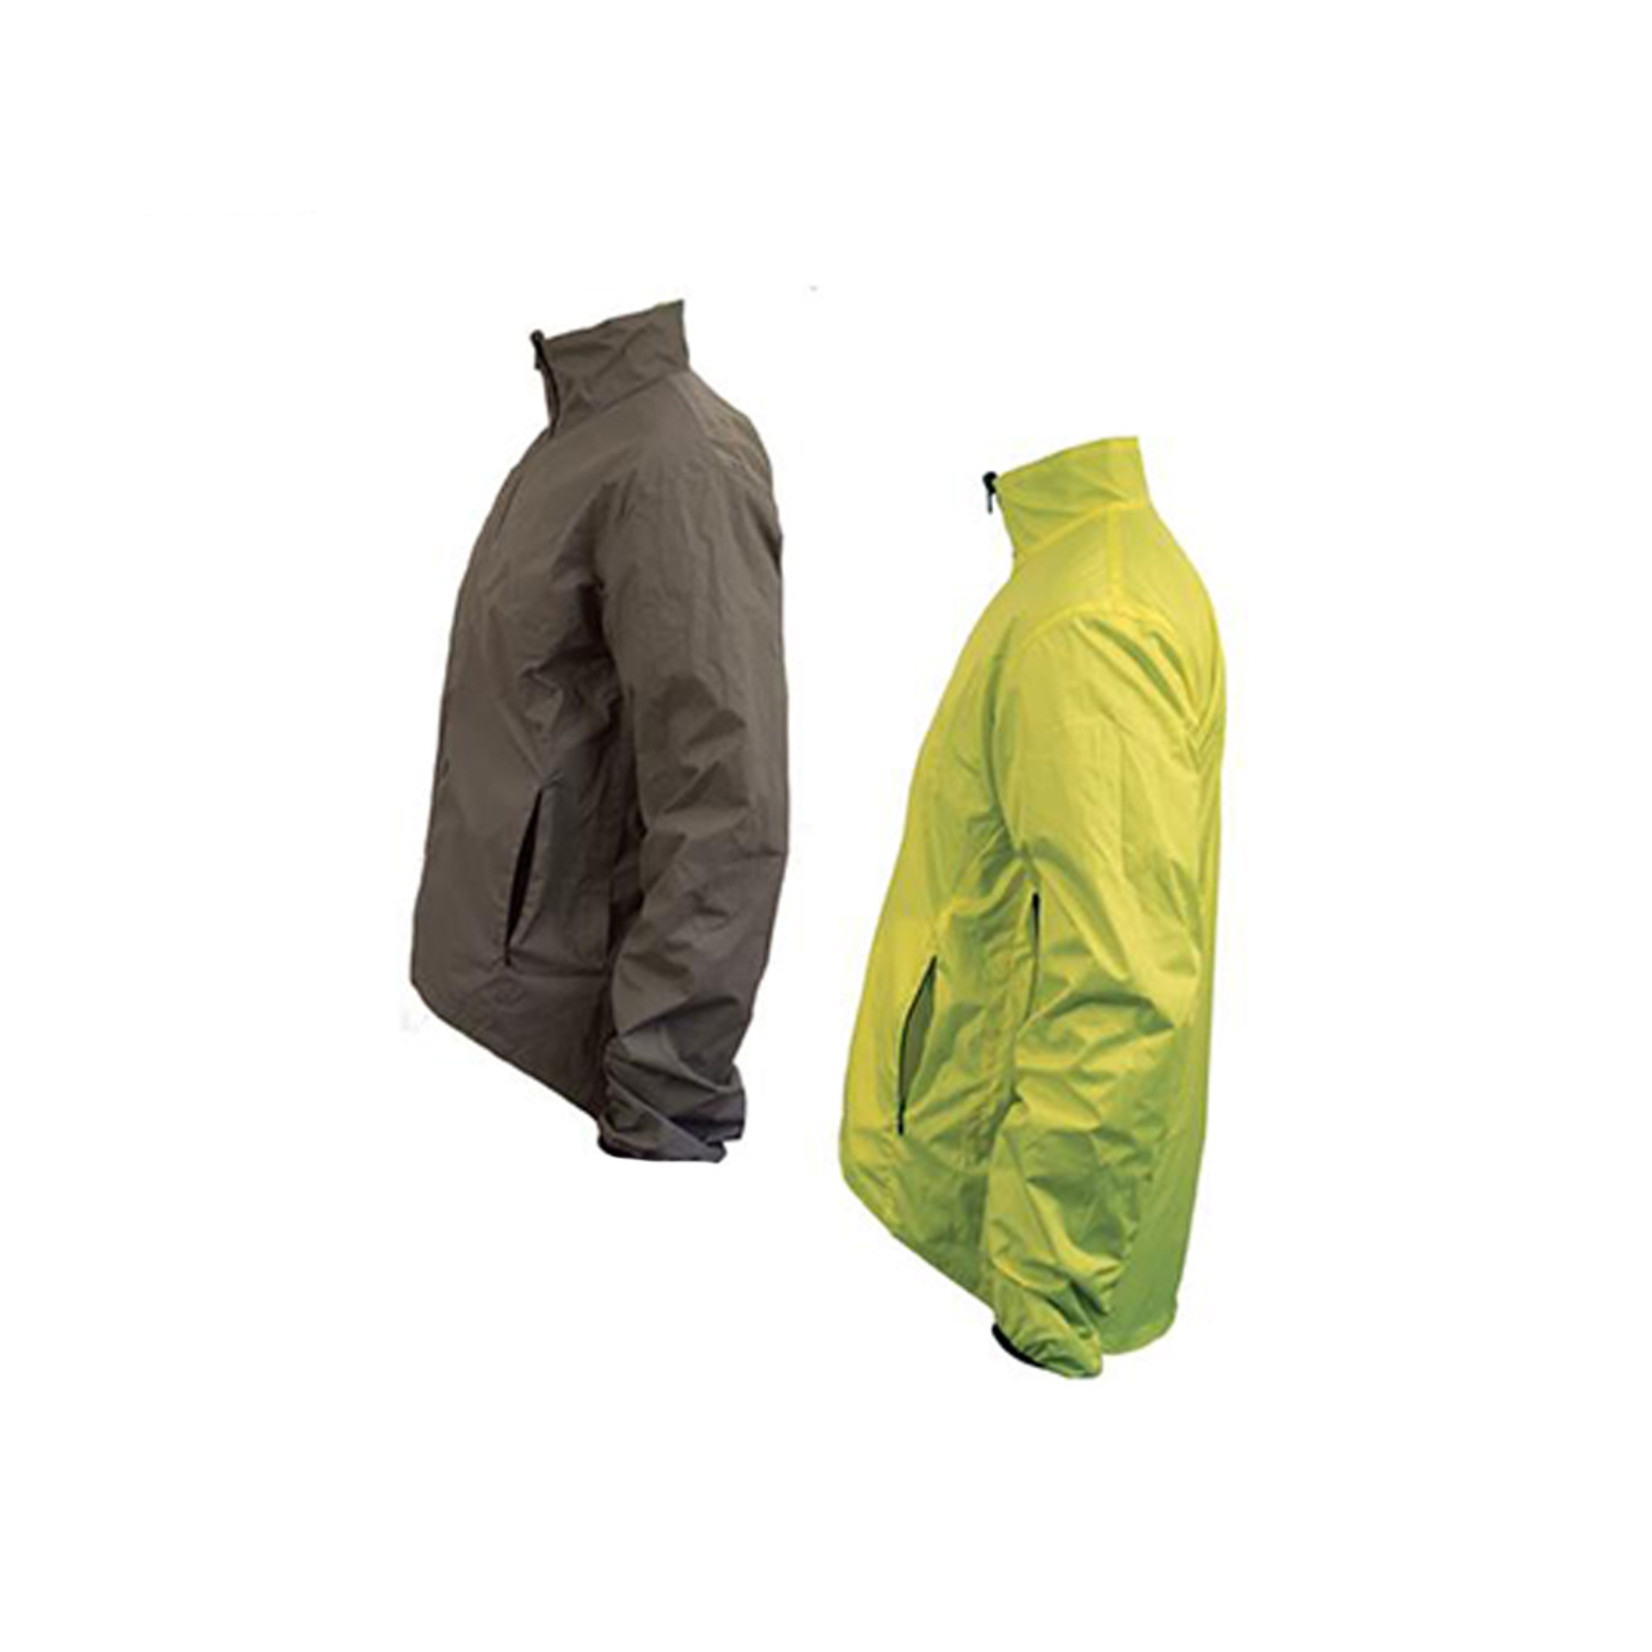 Azur Azur Transverse Bike Jacket Waterproof Breathable Fabric - Fluro Yellow - Small